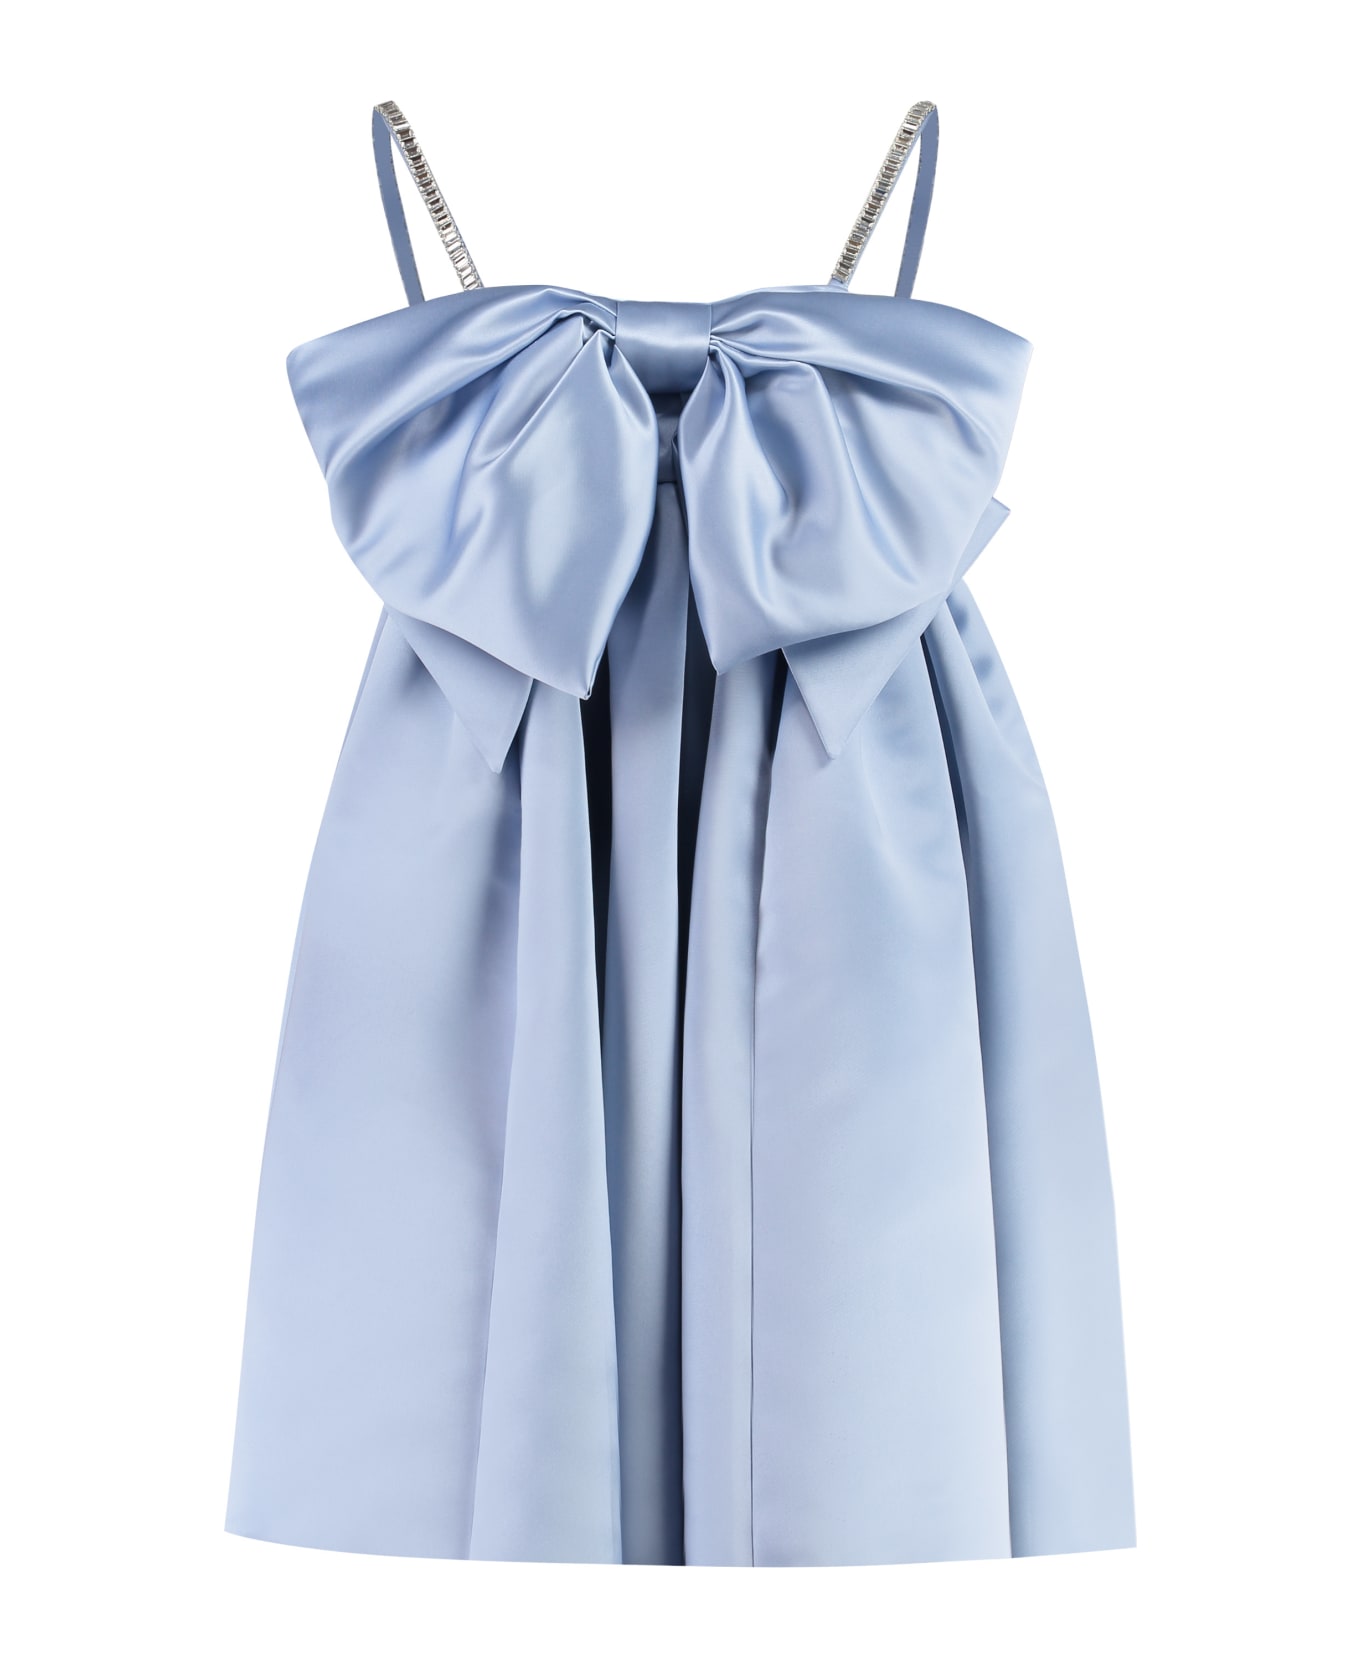 Nina Ricci Satin Dress - Light Blue